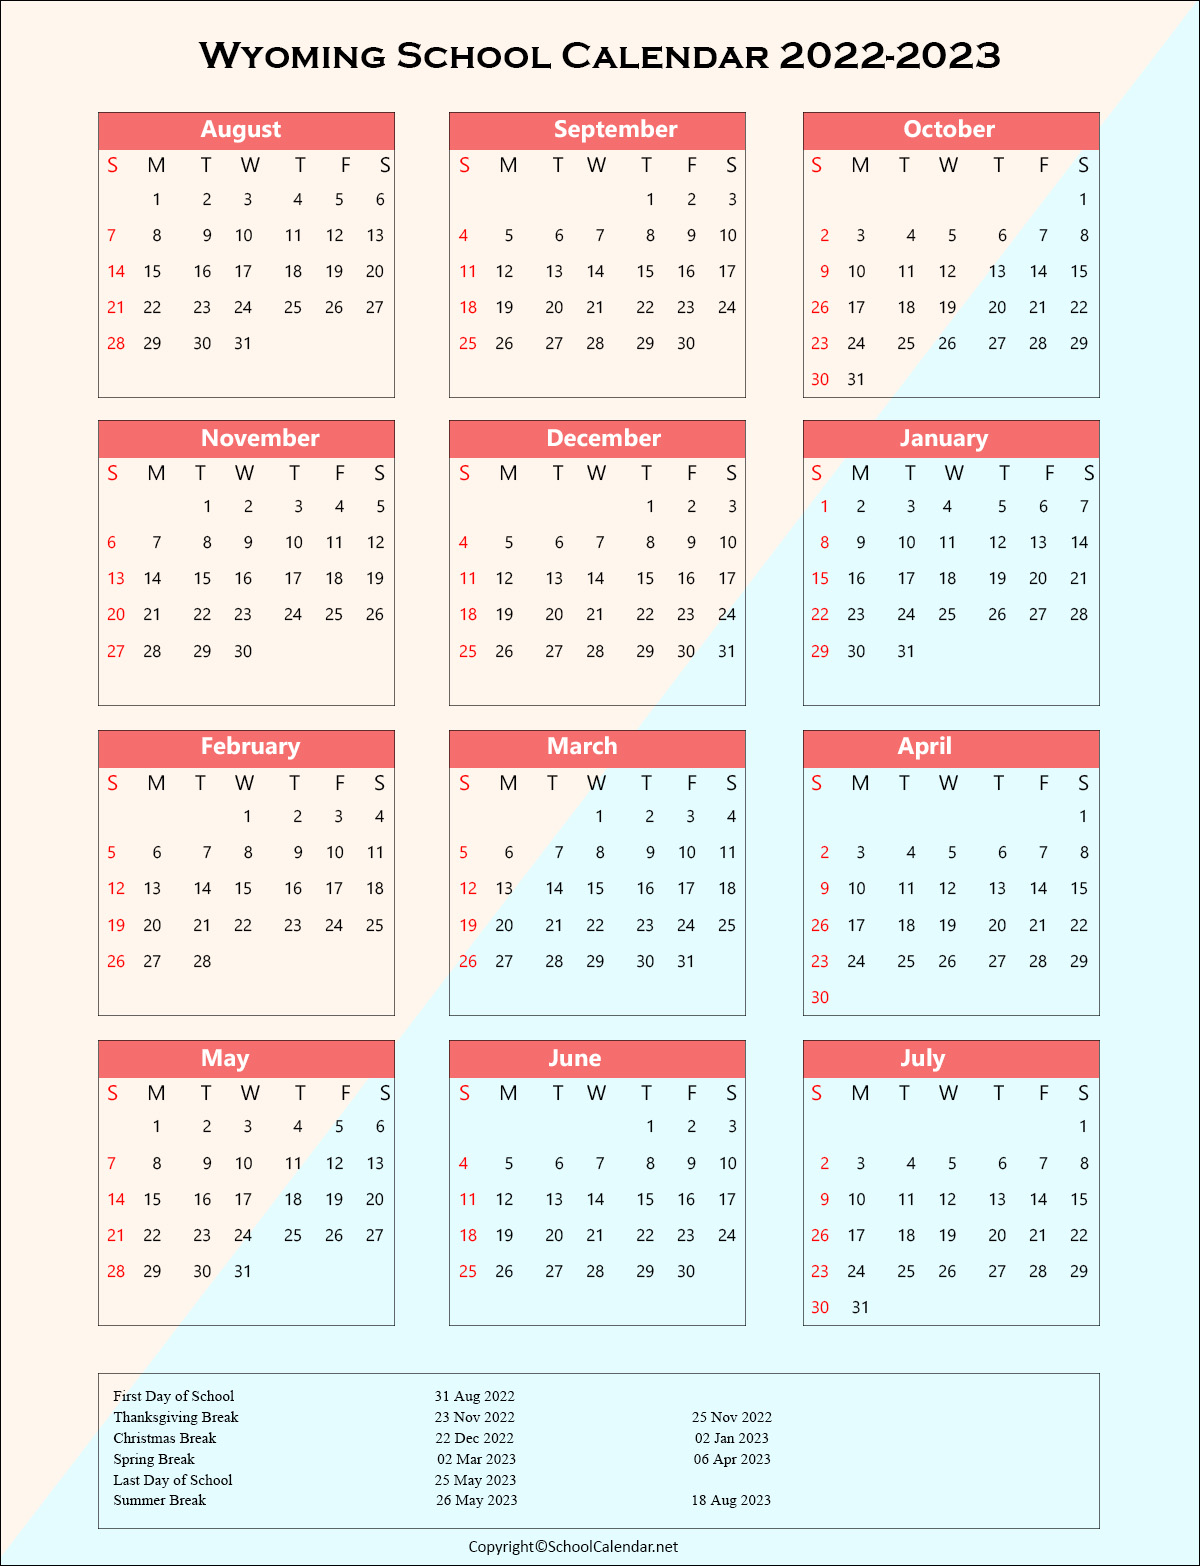 Wyoming School Holiday Calendar 2022